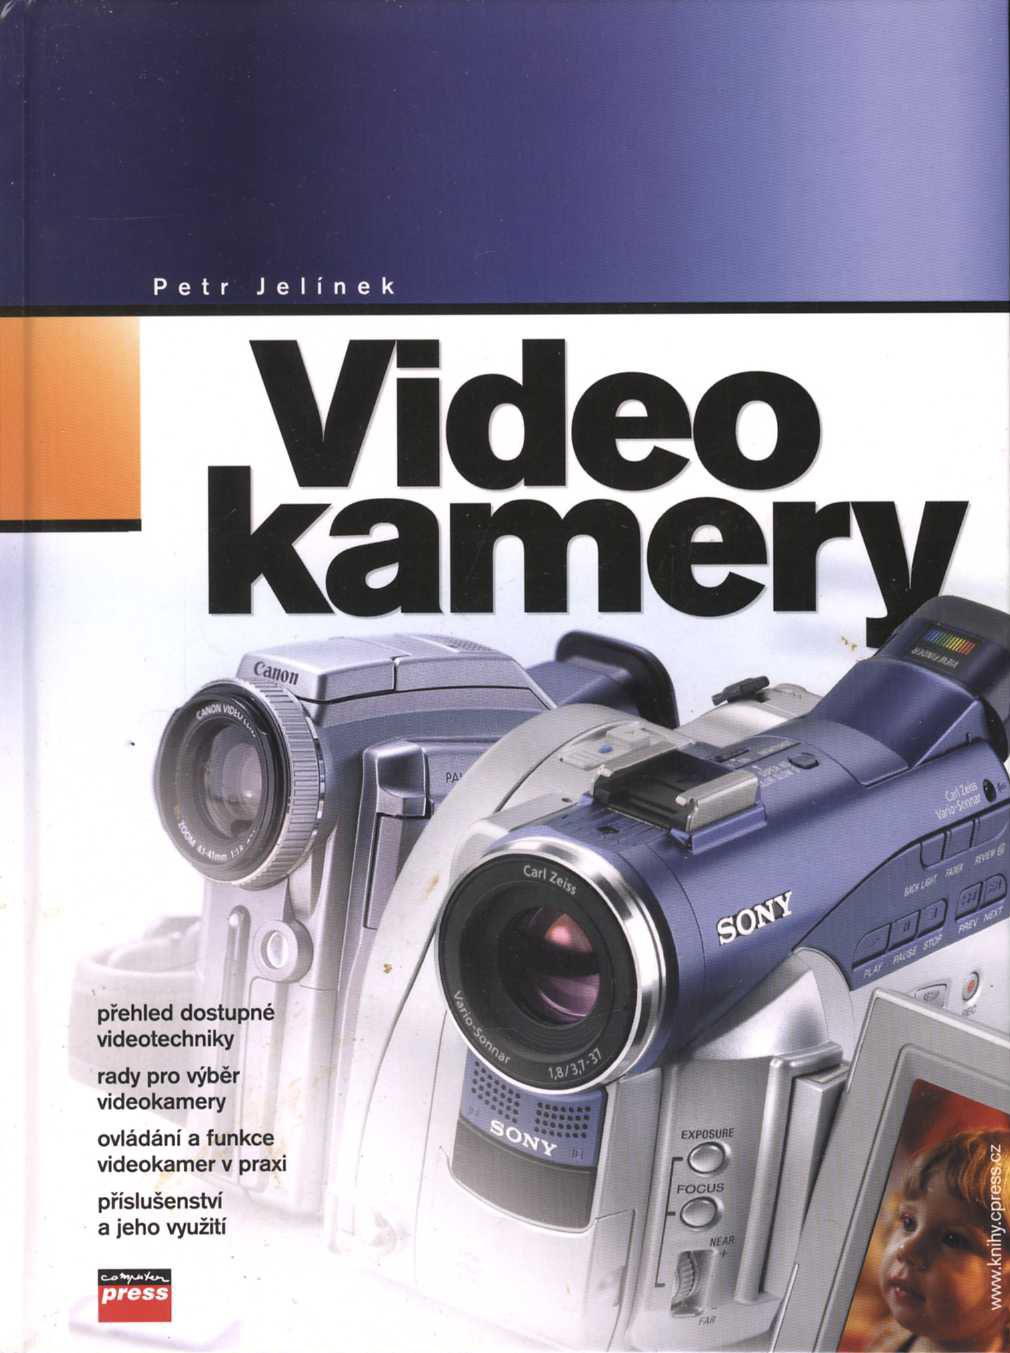 Videokamery (Petr Jelínek)